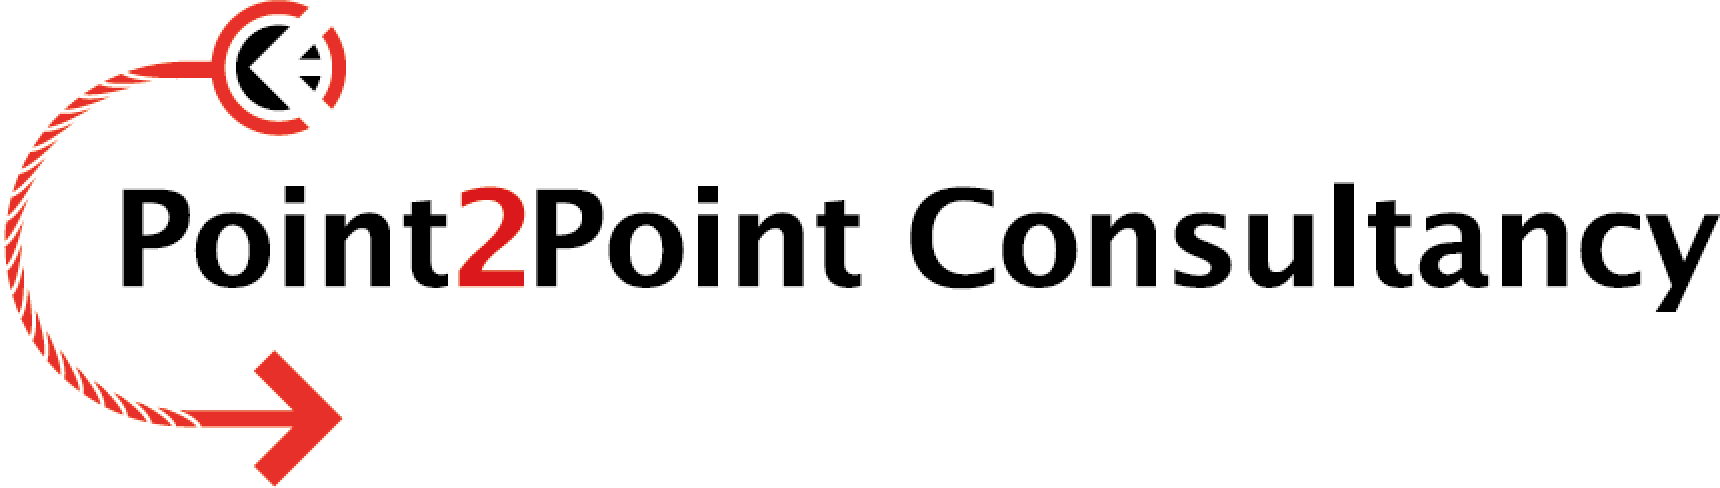 Point2Point Consultancy - Sint-Michielsgestel